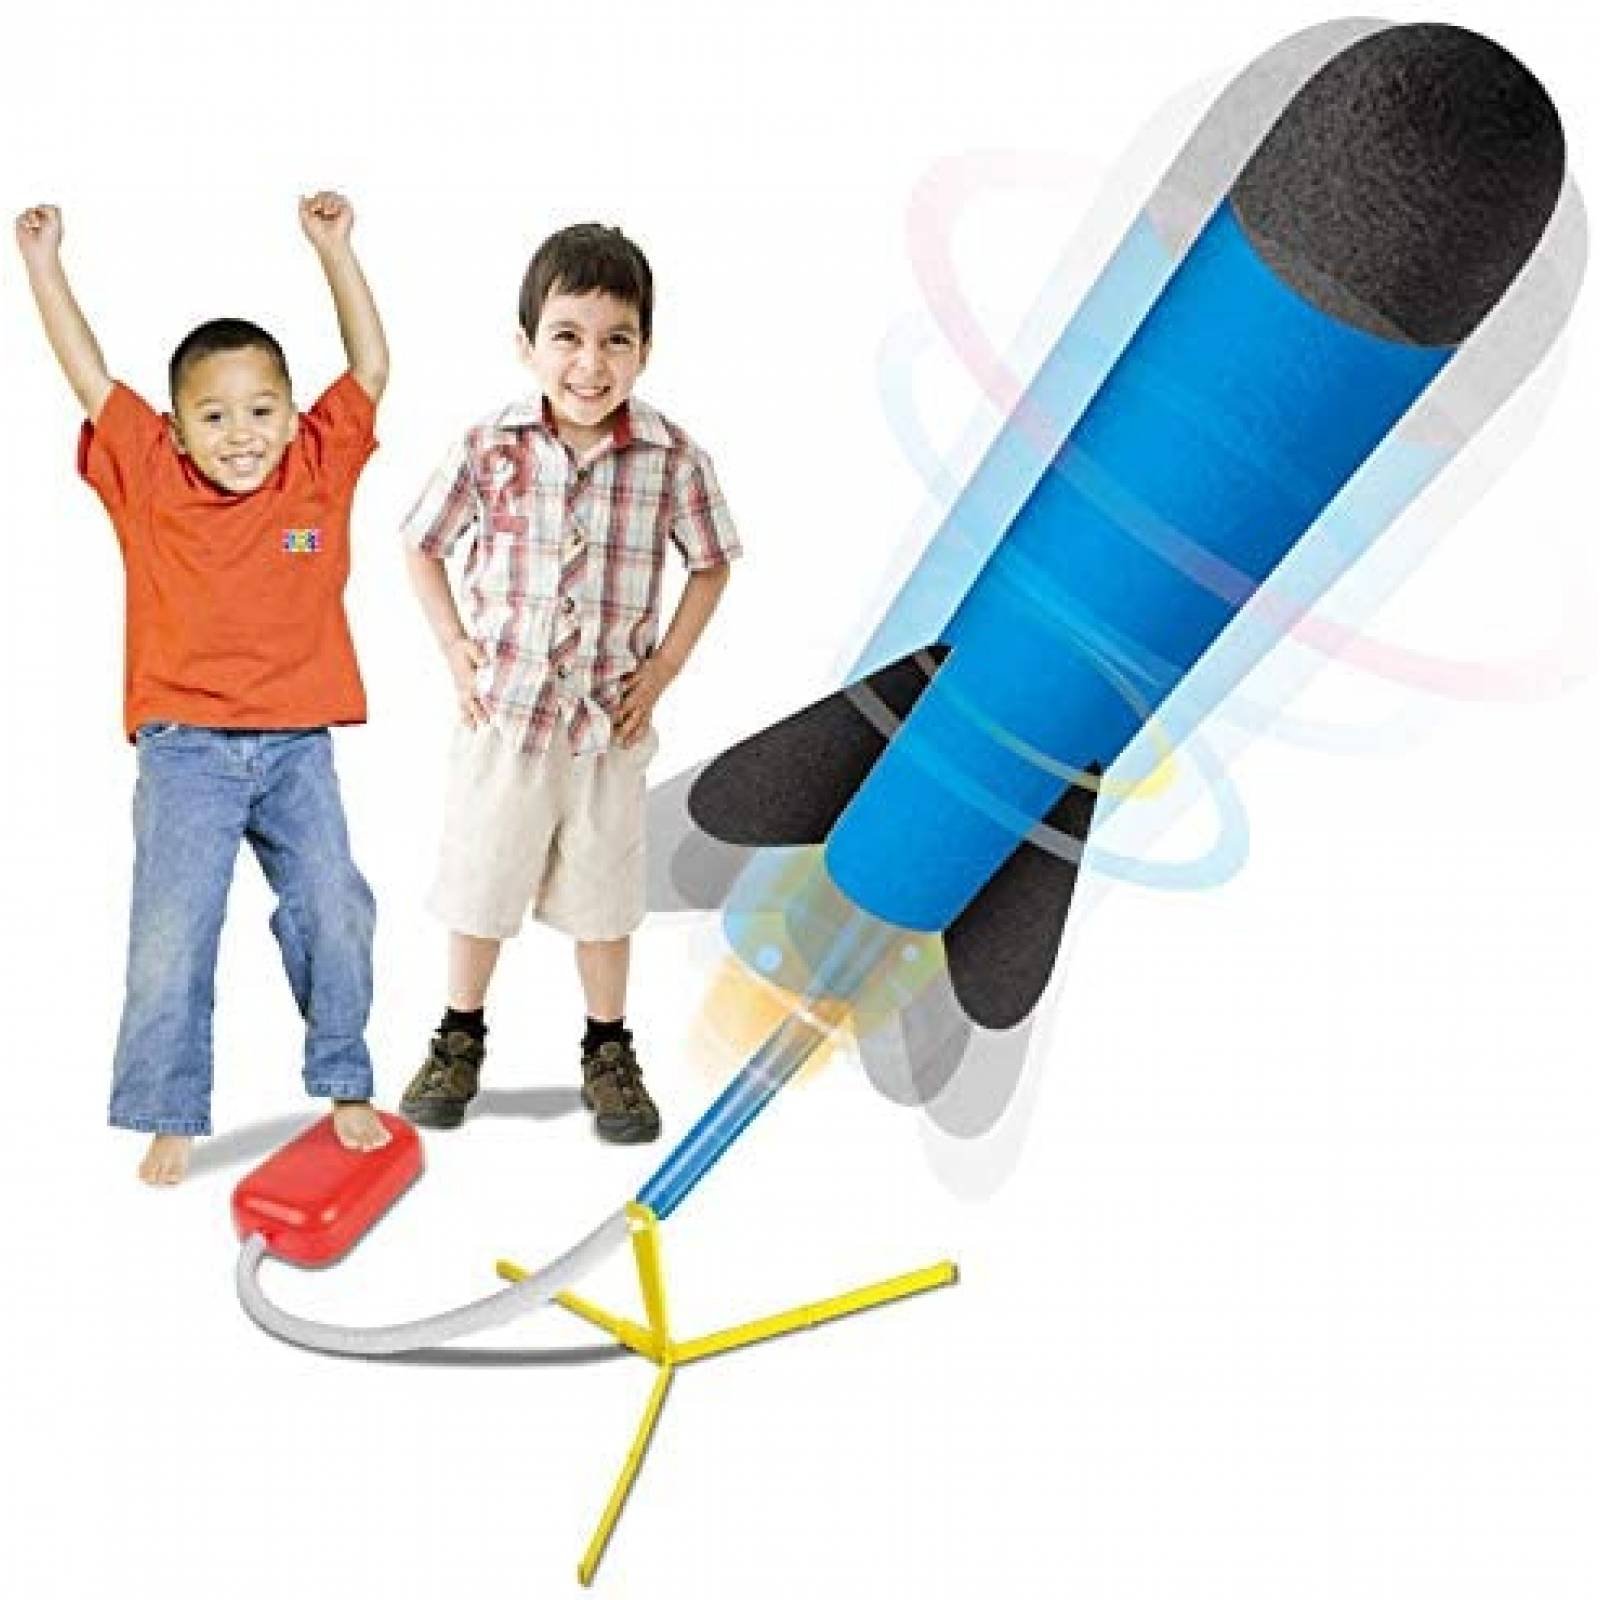 6 Juguetes Lanzadores Play22 Diseño de Cohete para Niños